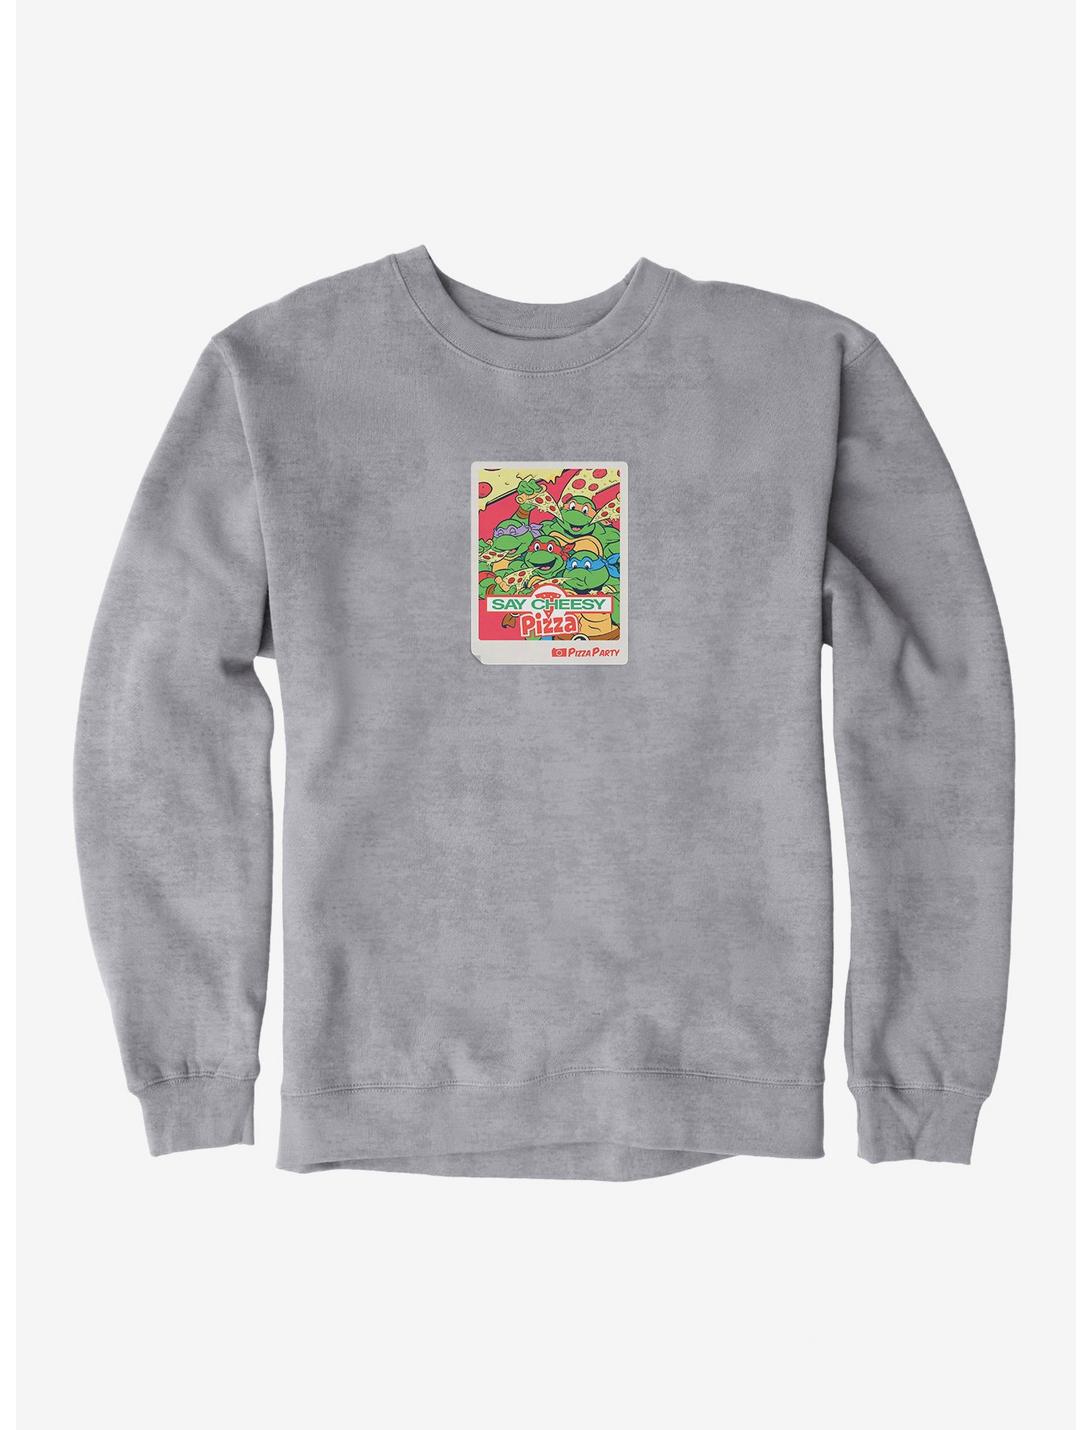 Teenage Mutant Ninja Turtles Say Cheesy Pizza Photo Sweatshirt, HEATHER GREY, hi-res